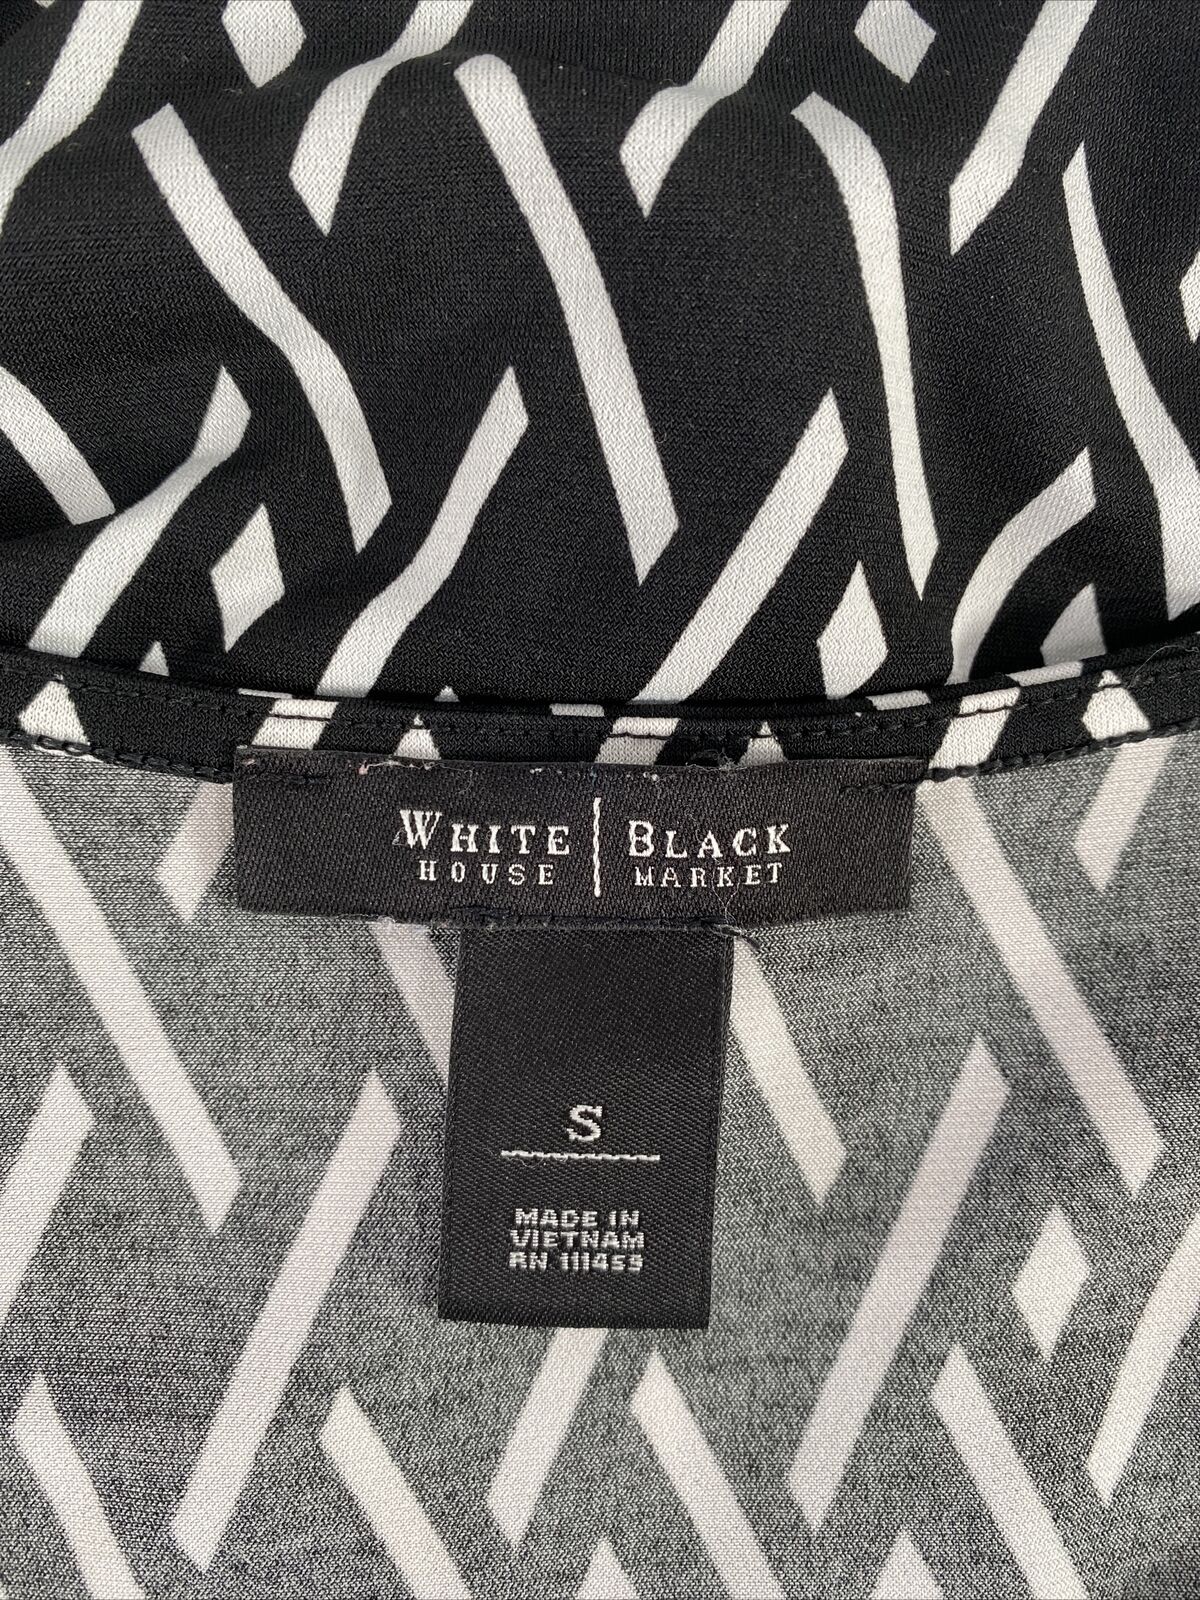 White House Black Market Women's Black/White Layered Tank Top Blouse - S